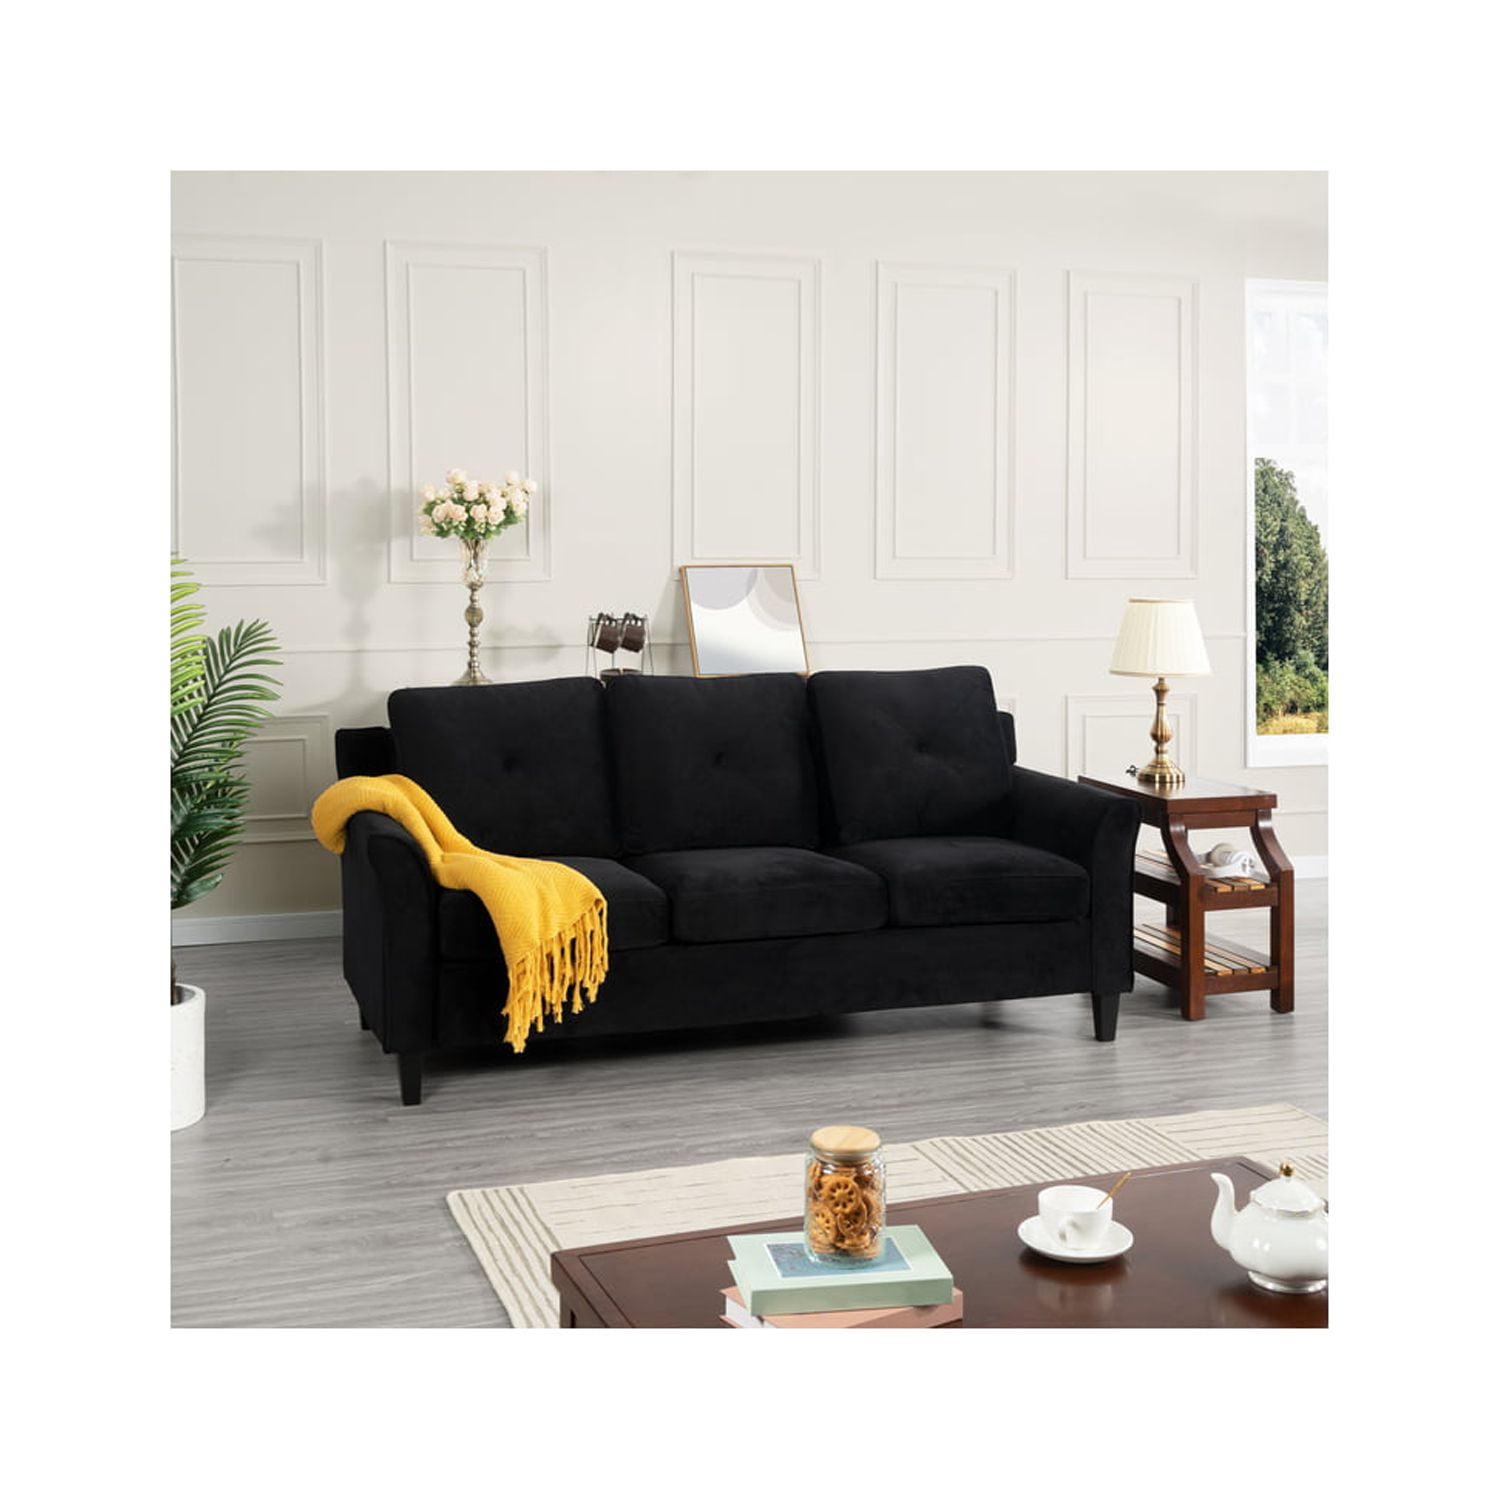  Naomi Home Raelynn Button Tufted Sofa Affordable Caramel Modern  Sofa - Microfiber Couch for Small Spaces Sofa Cama para Sala Modernos  Baratos - Durable Sturdy Living Room Furniture Tool-Free Assembly 